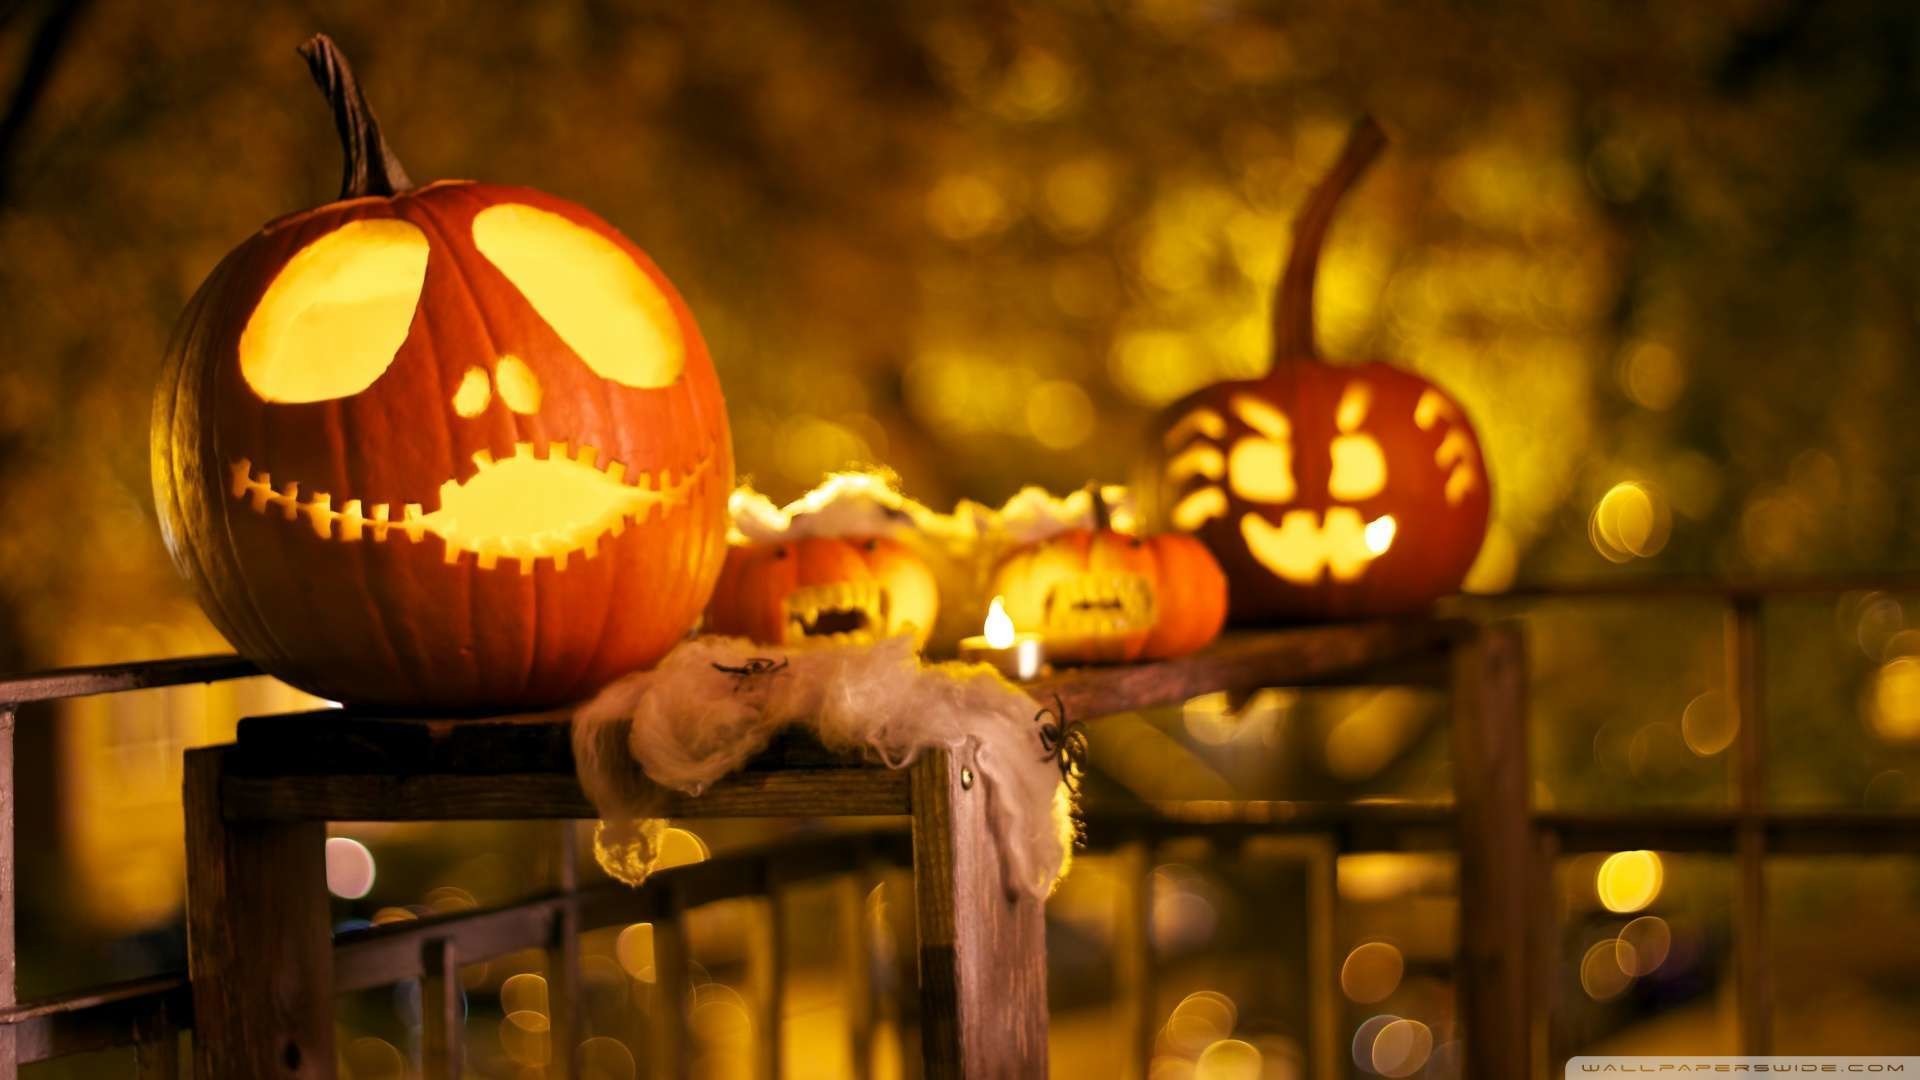 🔥 Download Halloween Desktop Wallpaper by @sduarte62 | Desktop ...